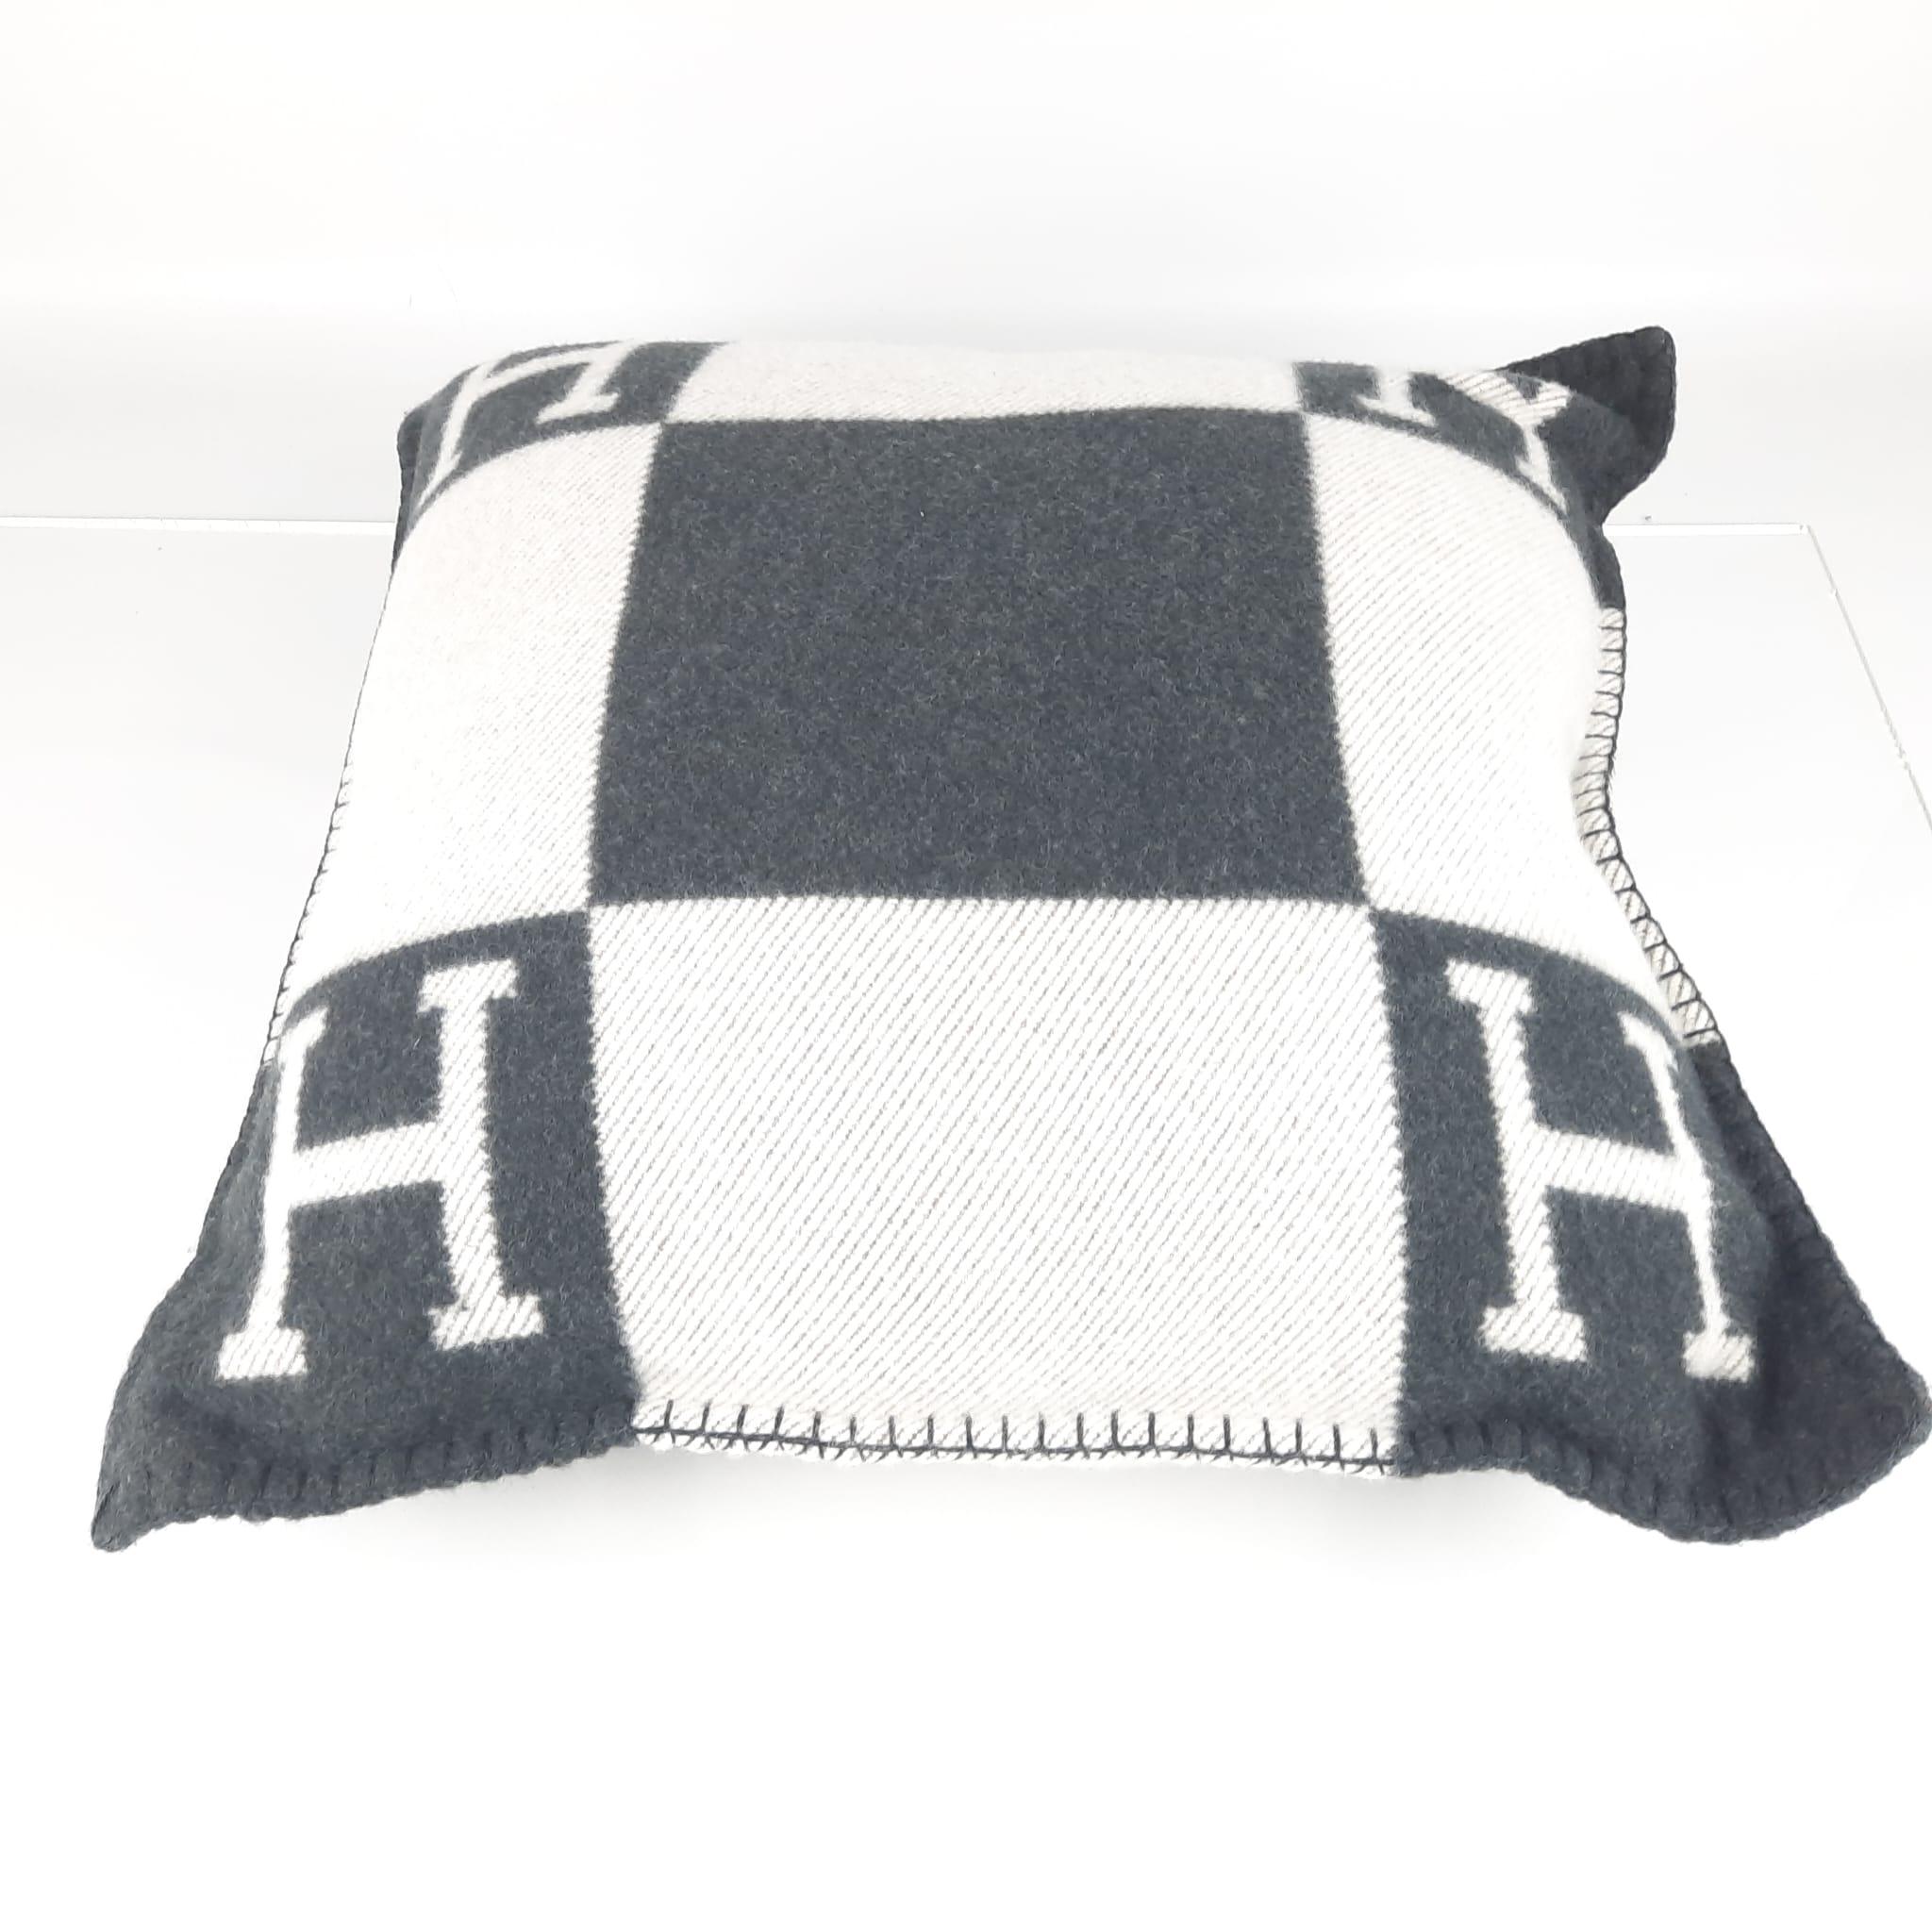 Hermes pillow avalon Ecru & Gris fonce small model For Sale 2